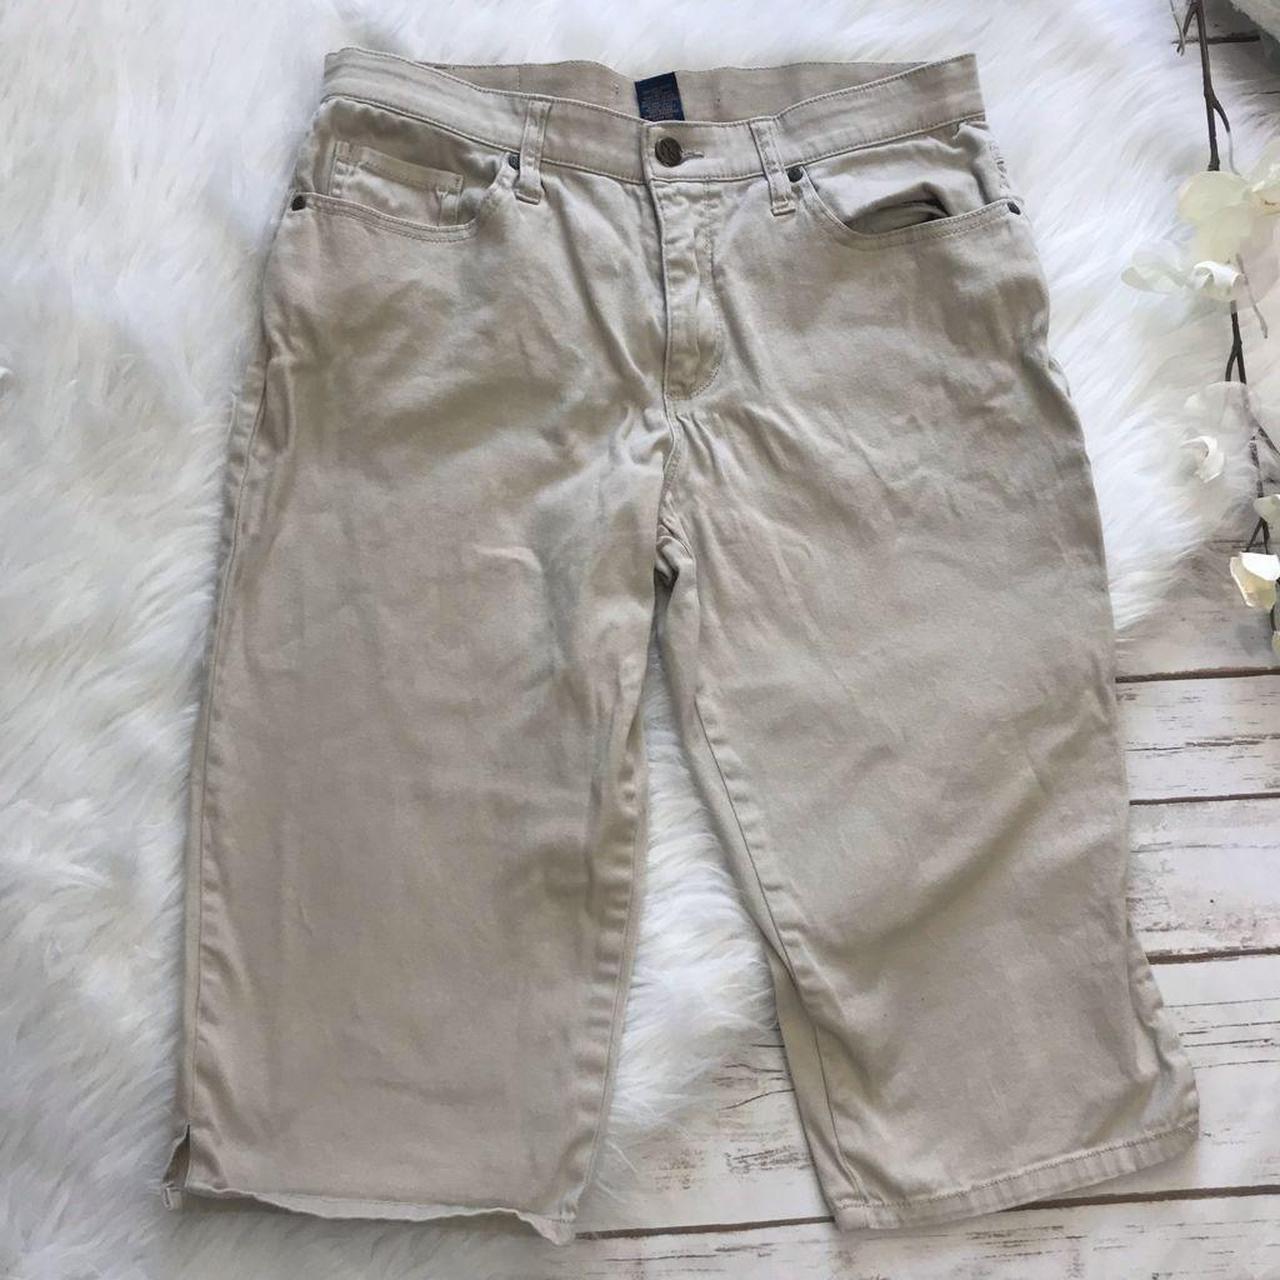 NorthCrest Capri Pants Size 14. Light beige color. - Depop